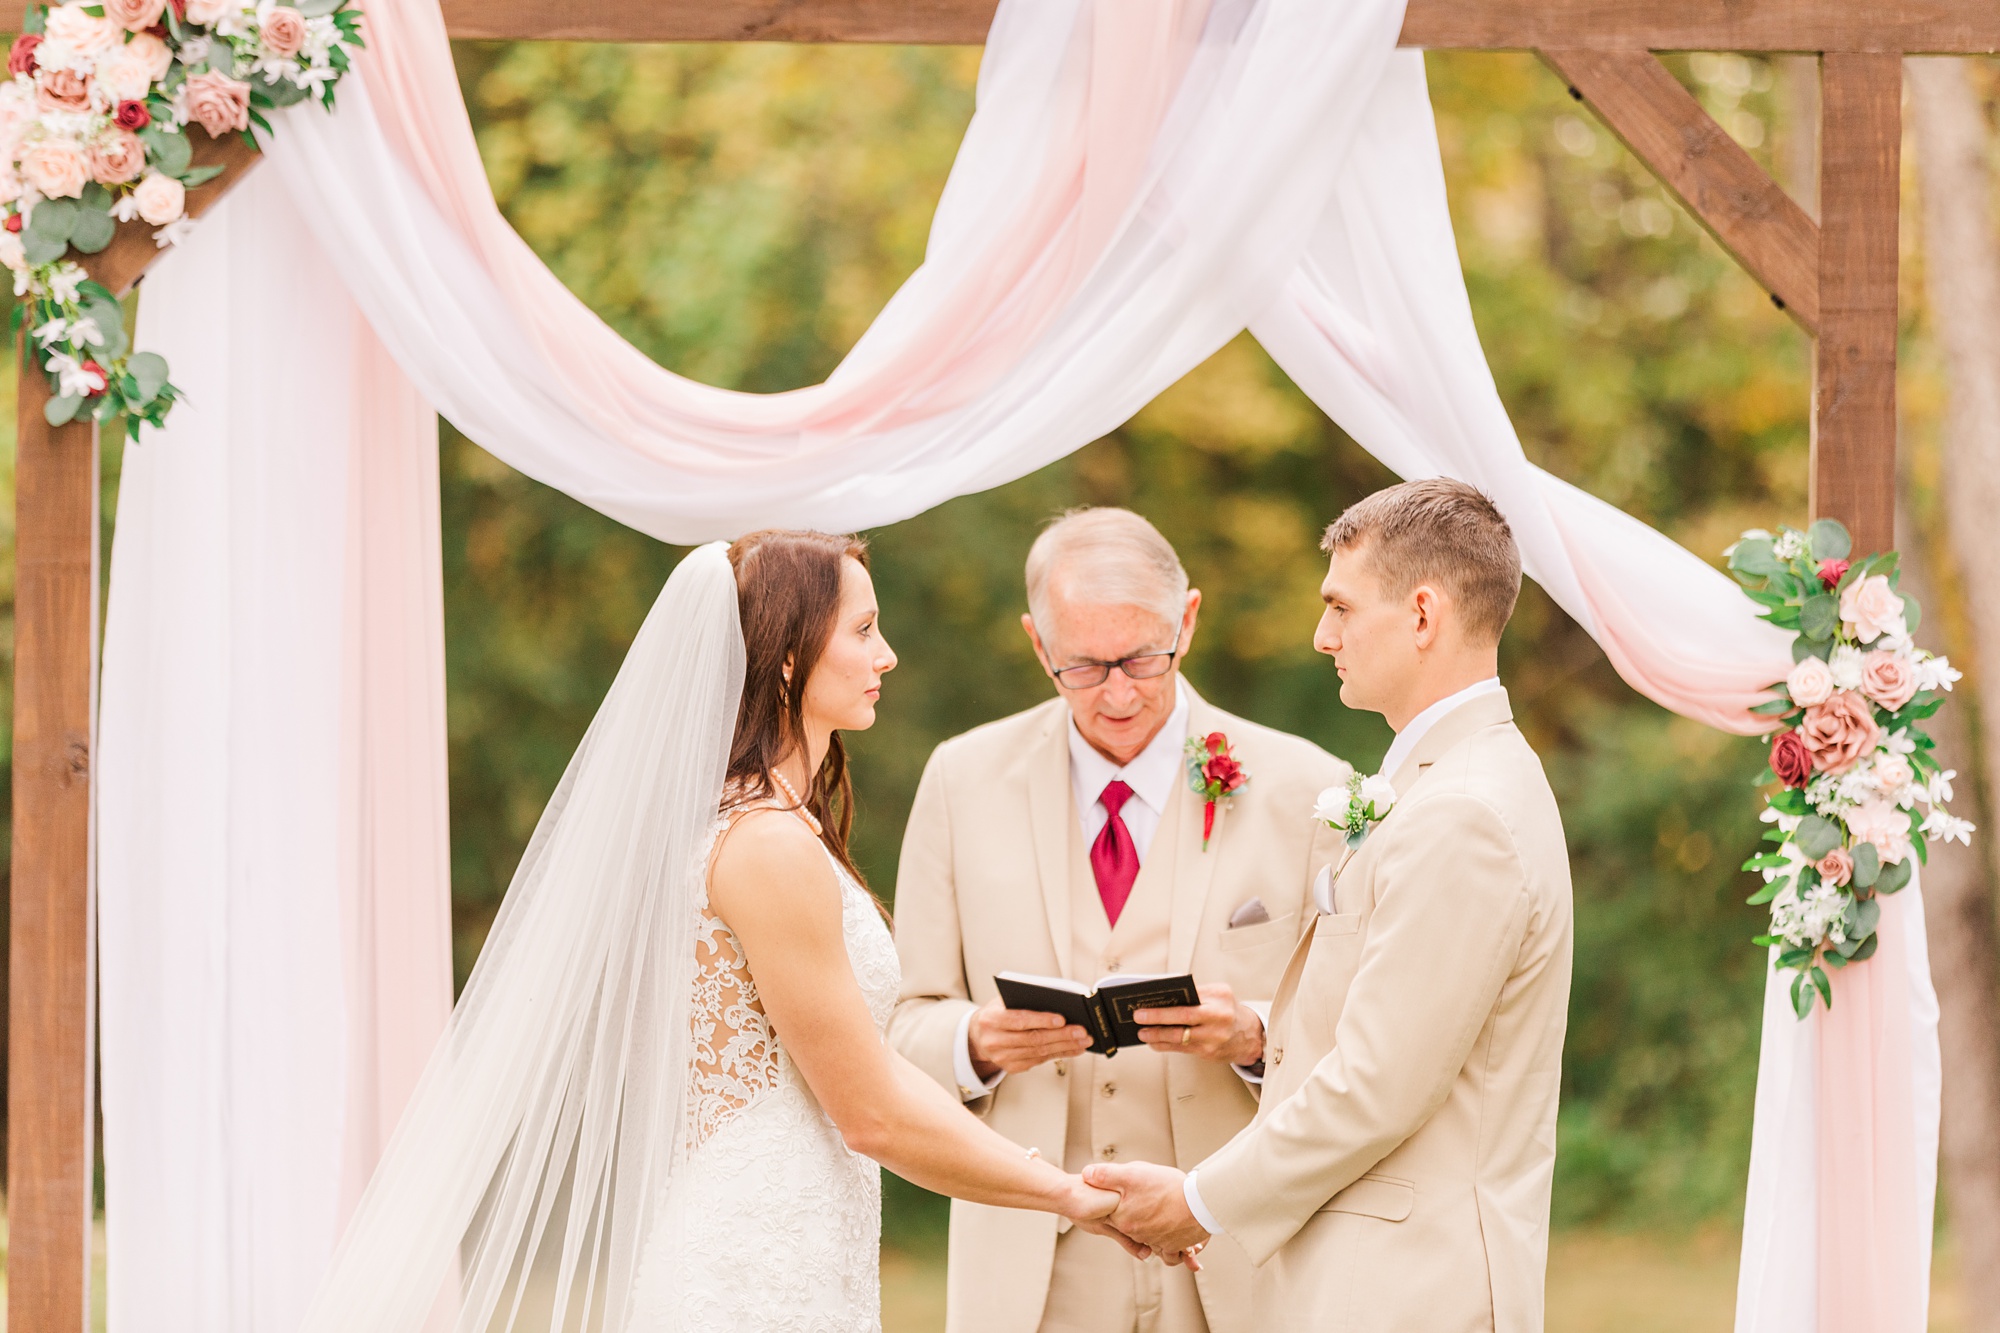 newlyweds exchange vows during backyard wedding in Godfrey IL